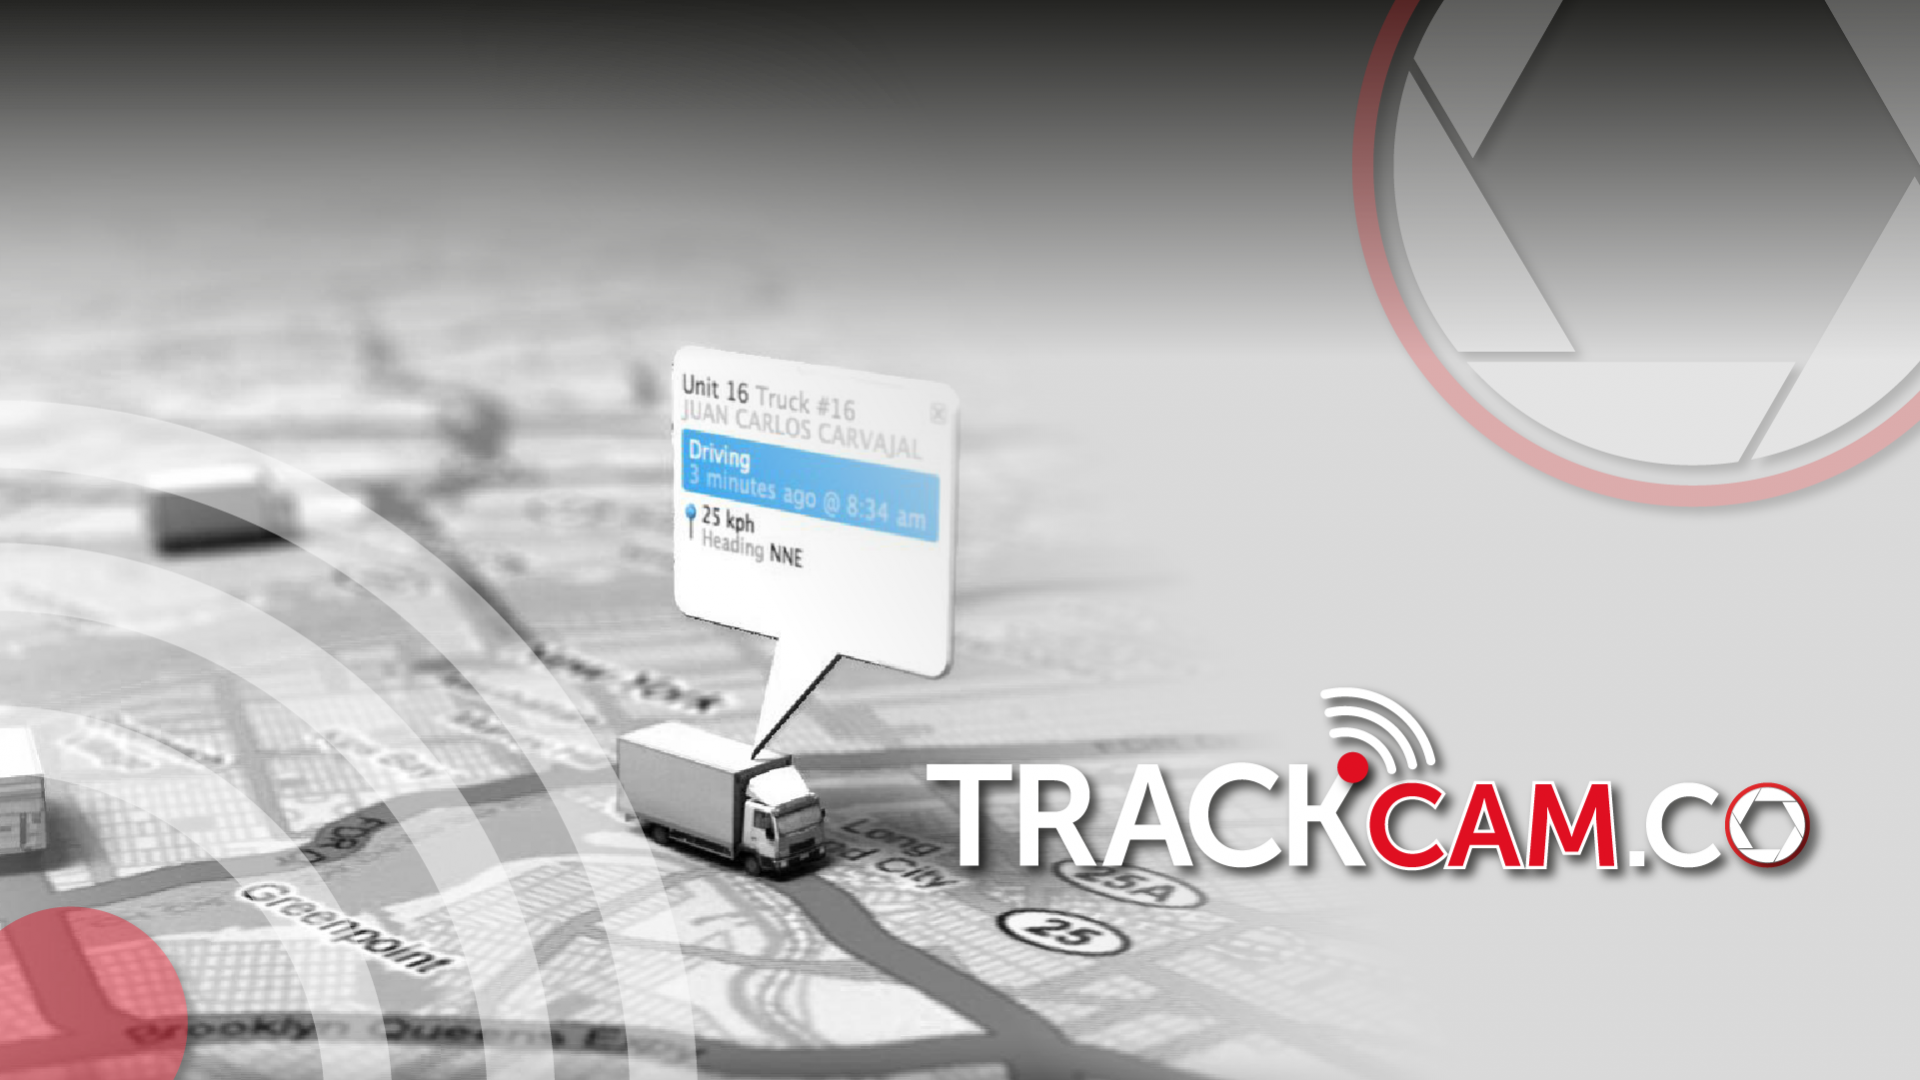 TrackCam.co